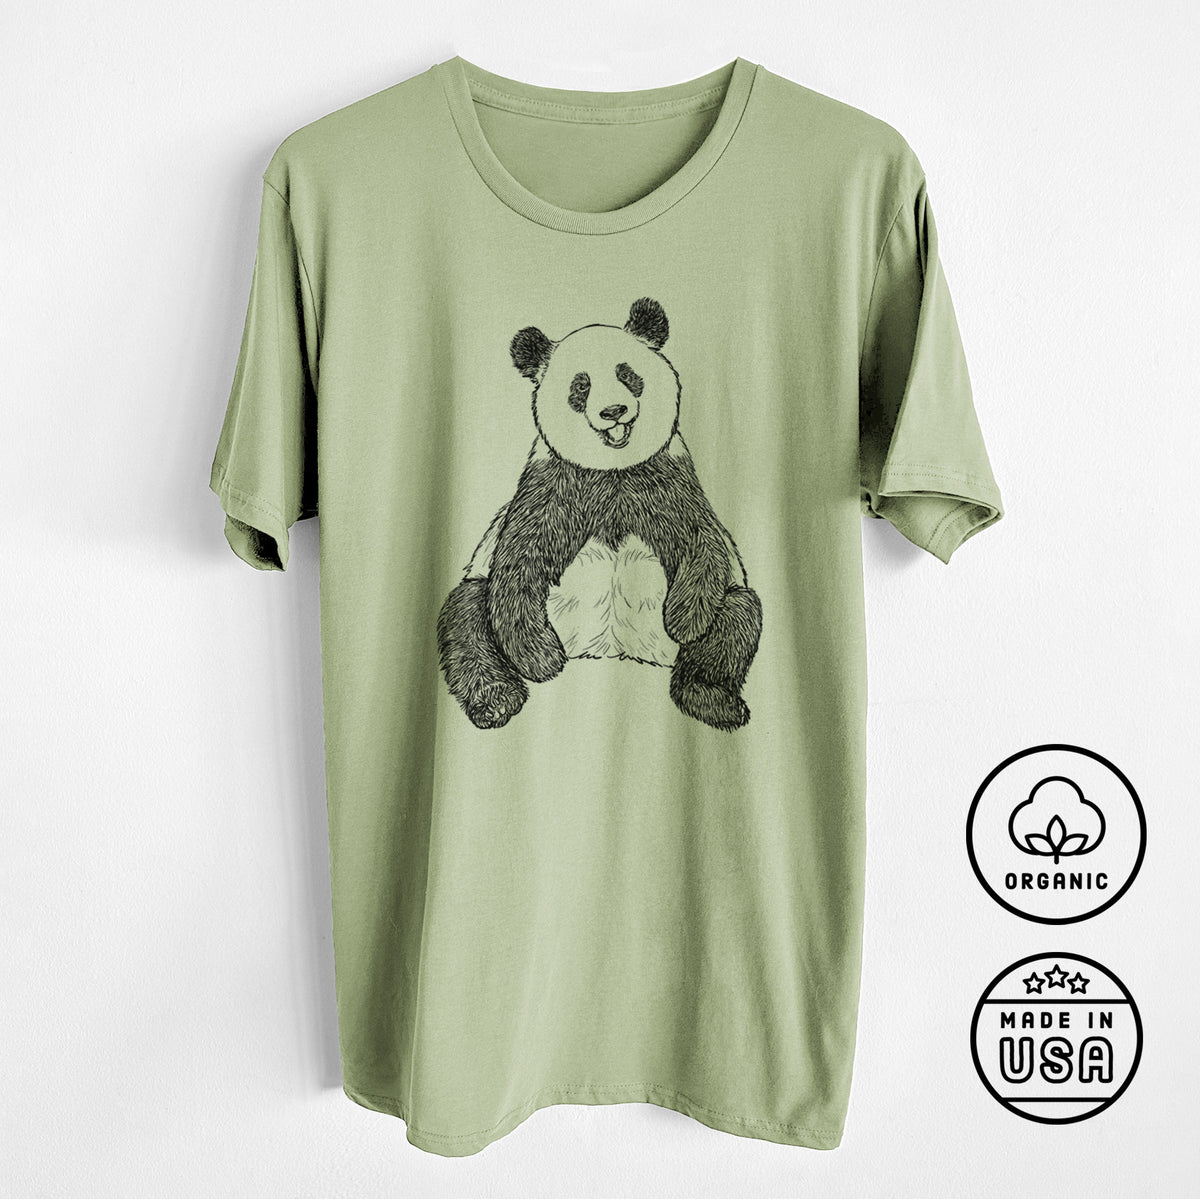 Ailuropoda melanoleuca - Giant Panda Sitting - Unisex Crewneck - Made in USA - 100% Organic Cotton